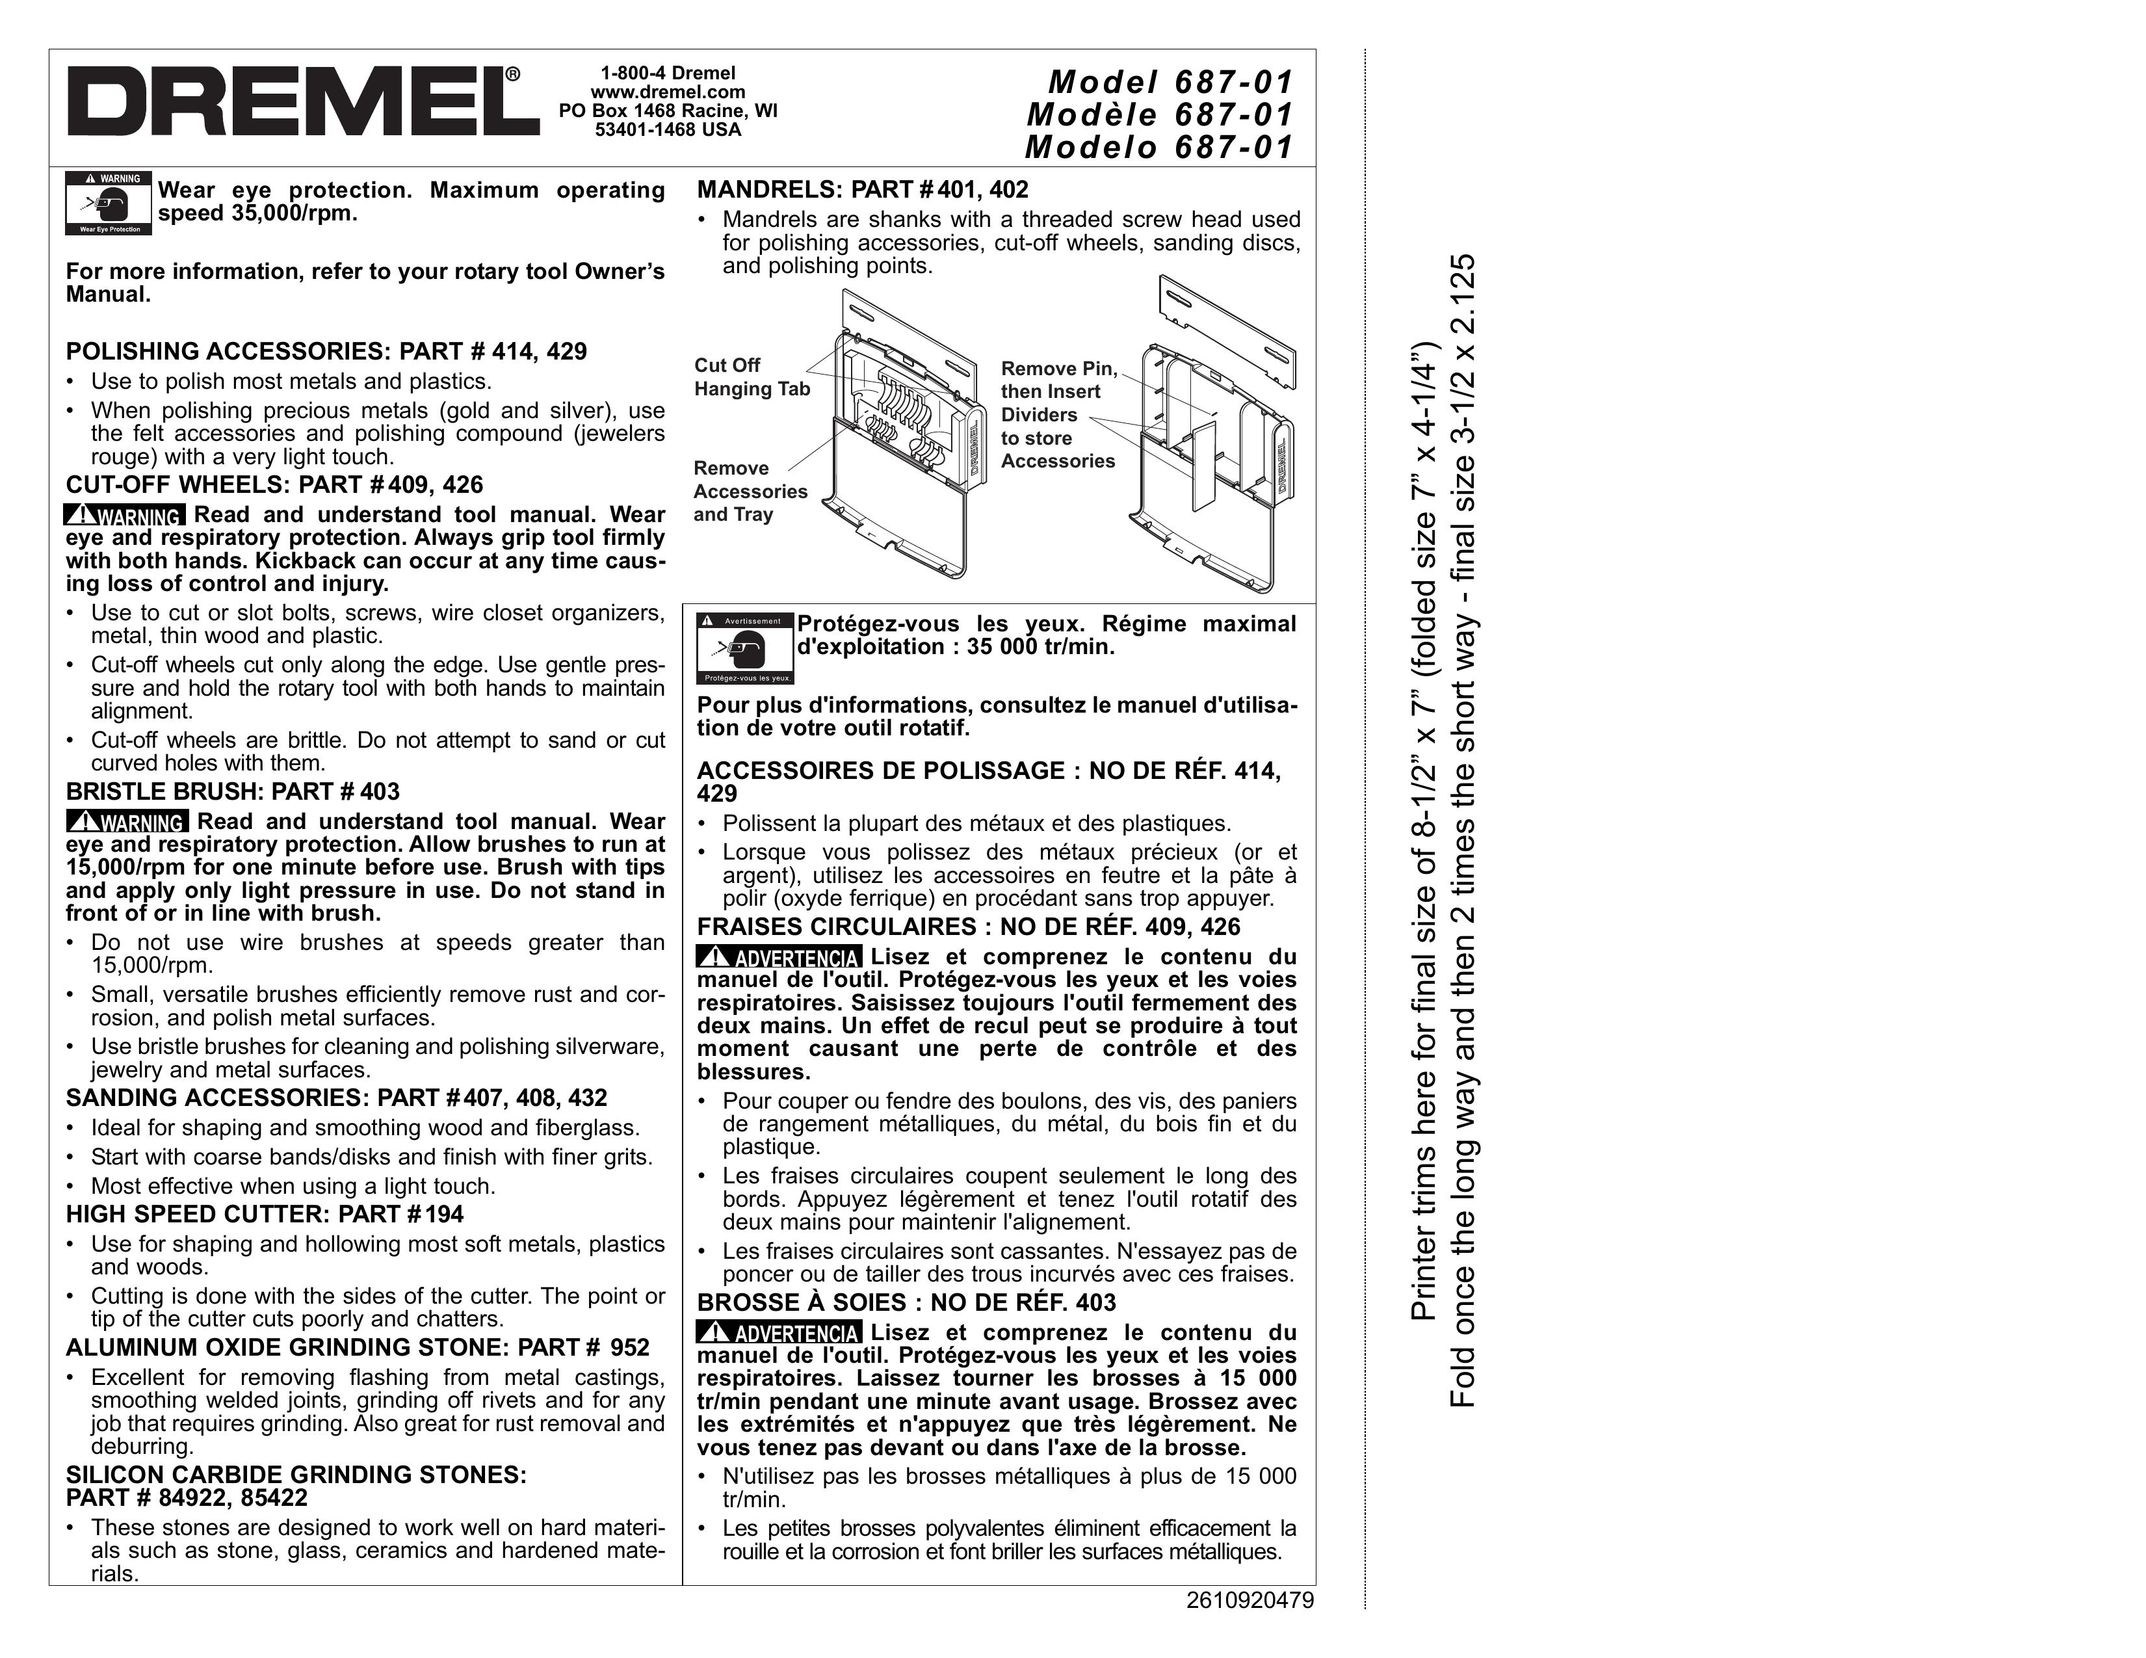 Dremel 687-01 Sander User Manual